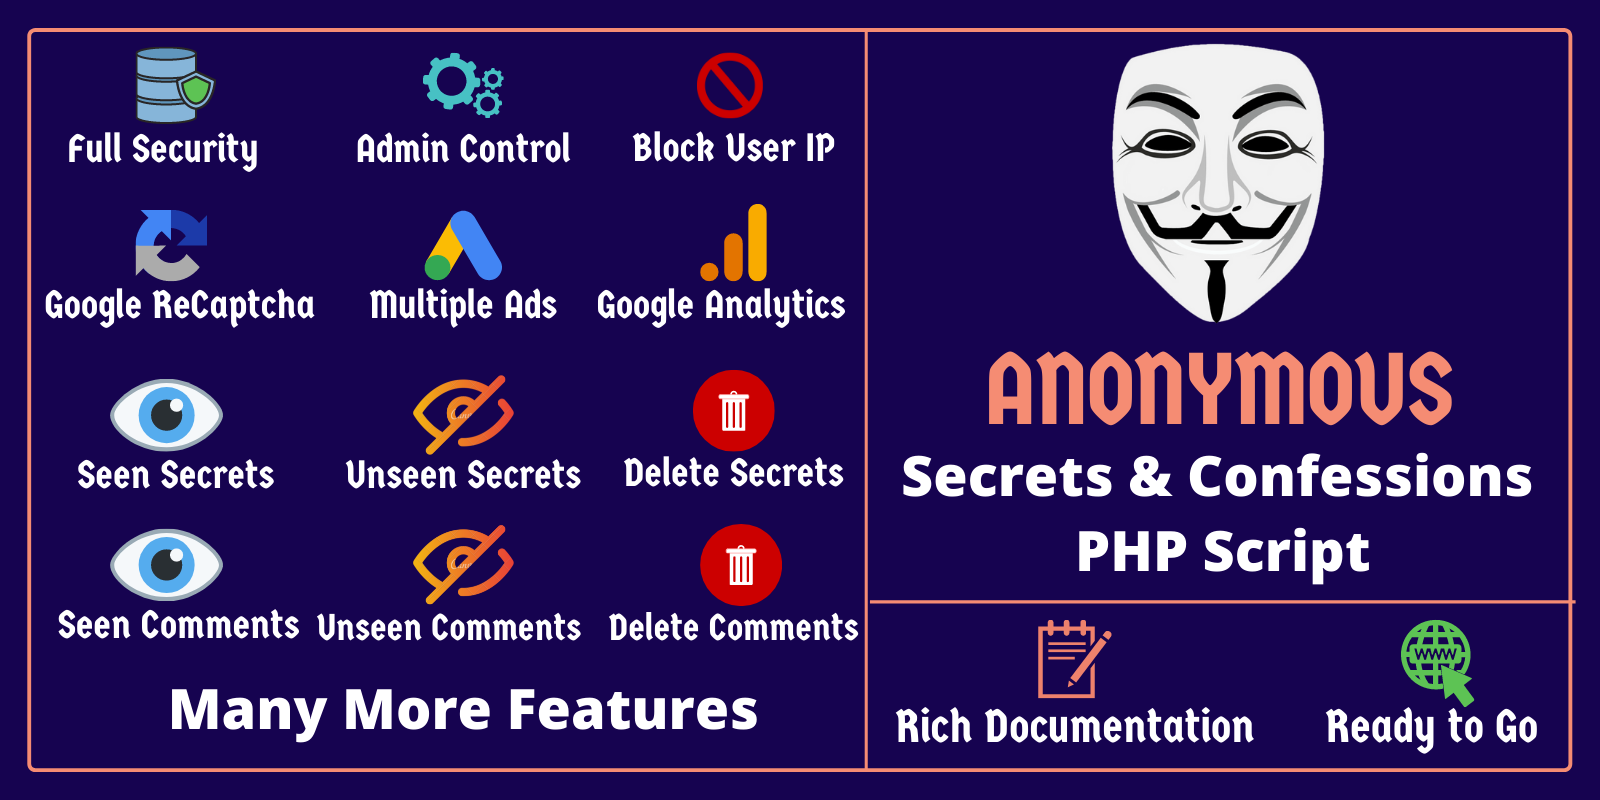 AnonymousCity - Secrets & Confessions PHP Script